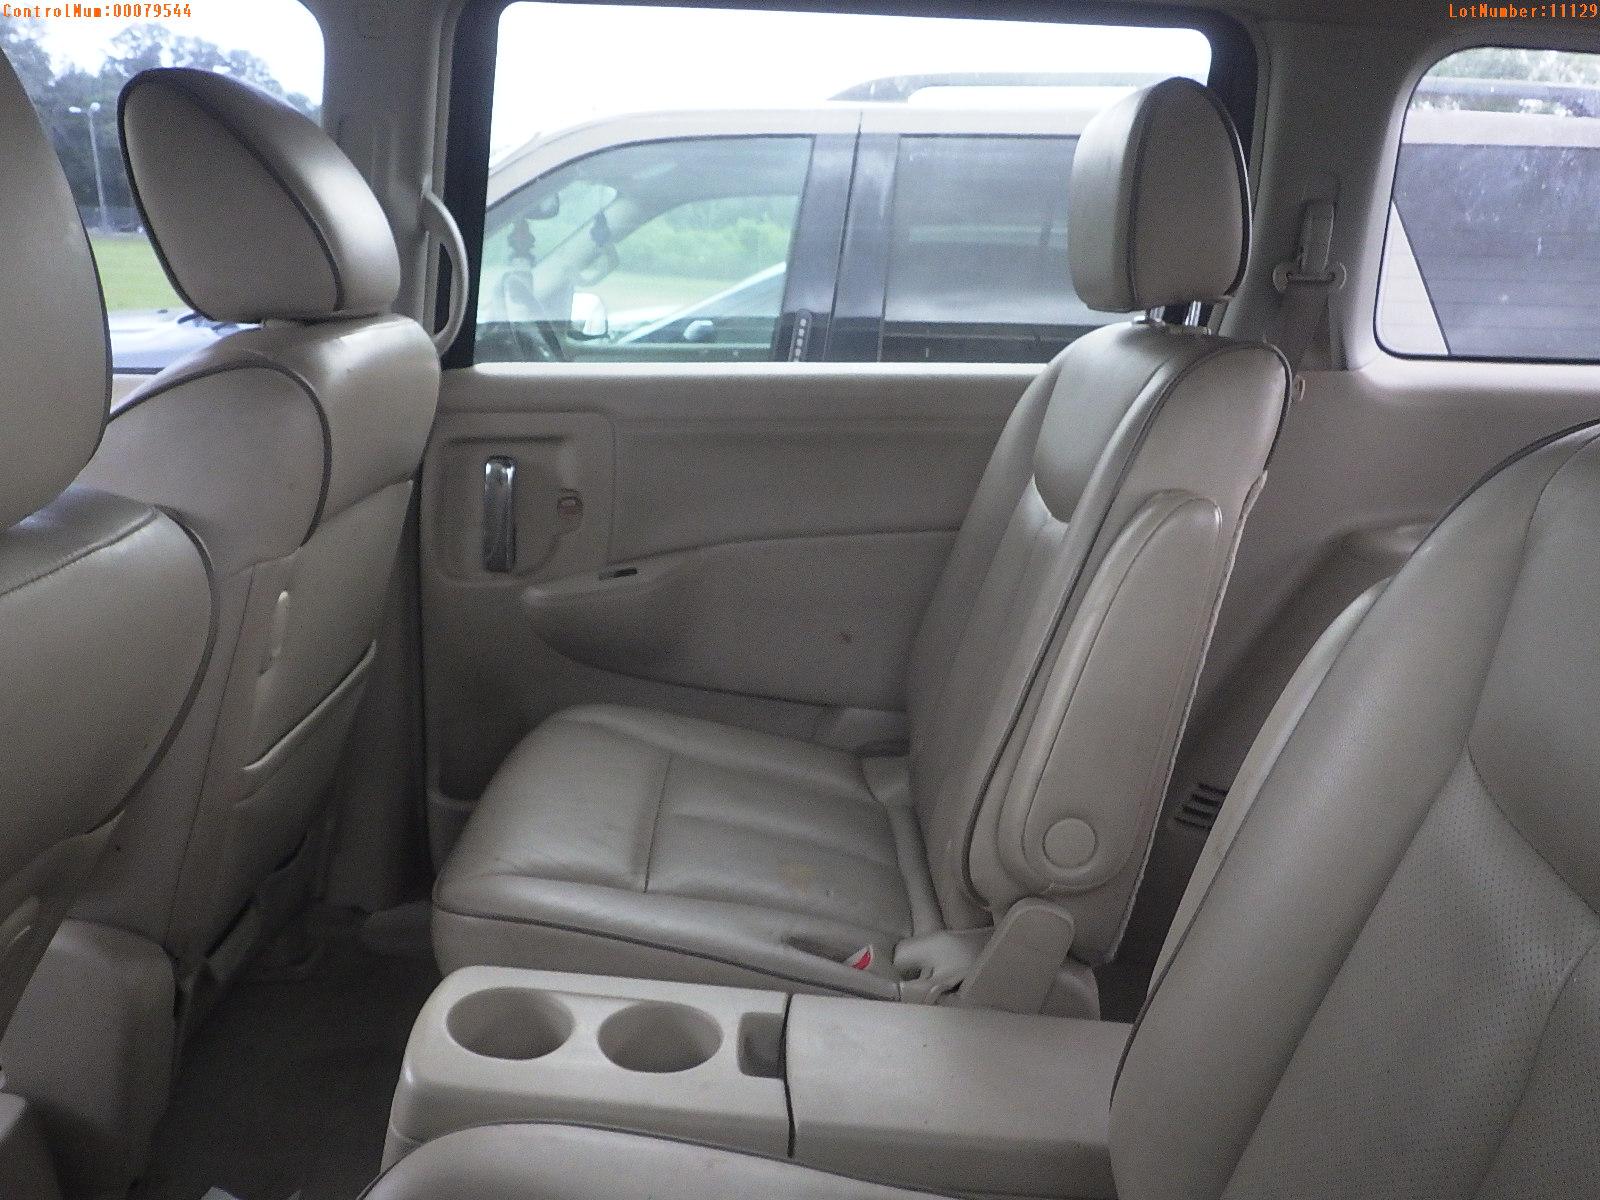 5-07128 (Cars-Van 4D)  Seller:Private/Dealer 2015 NISS QUEST